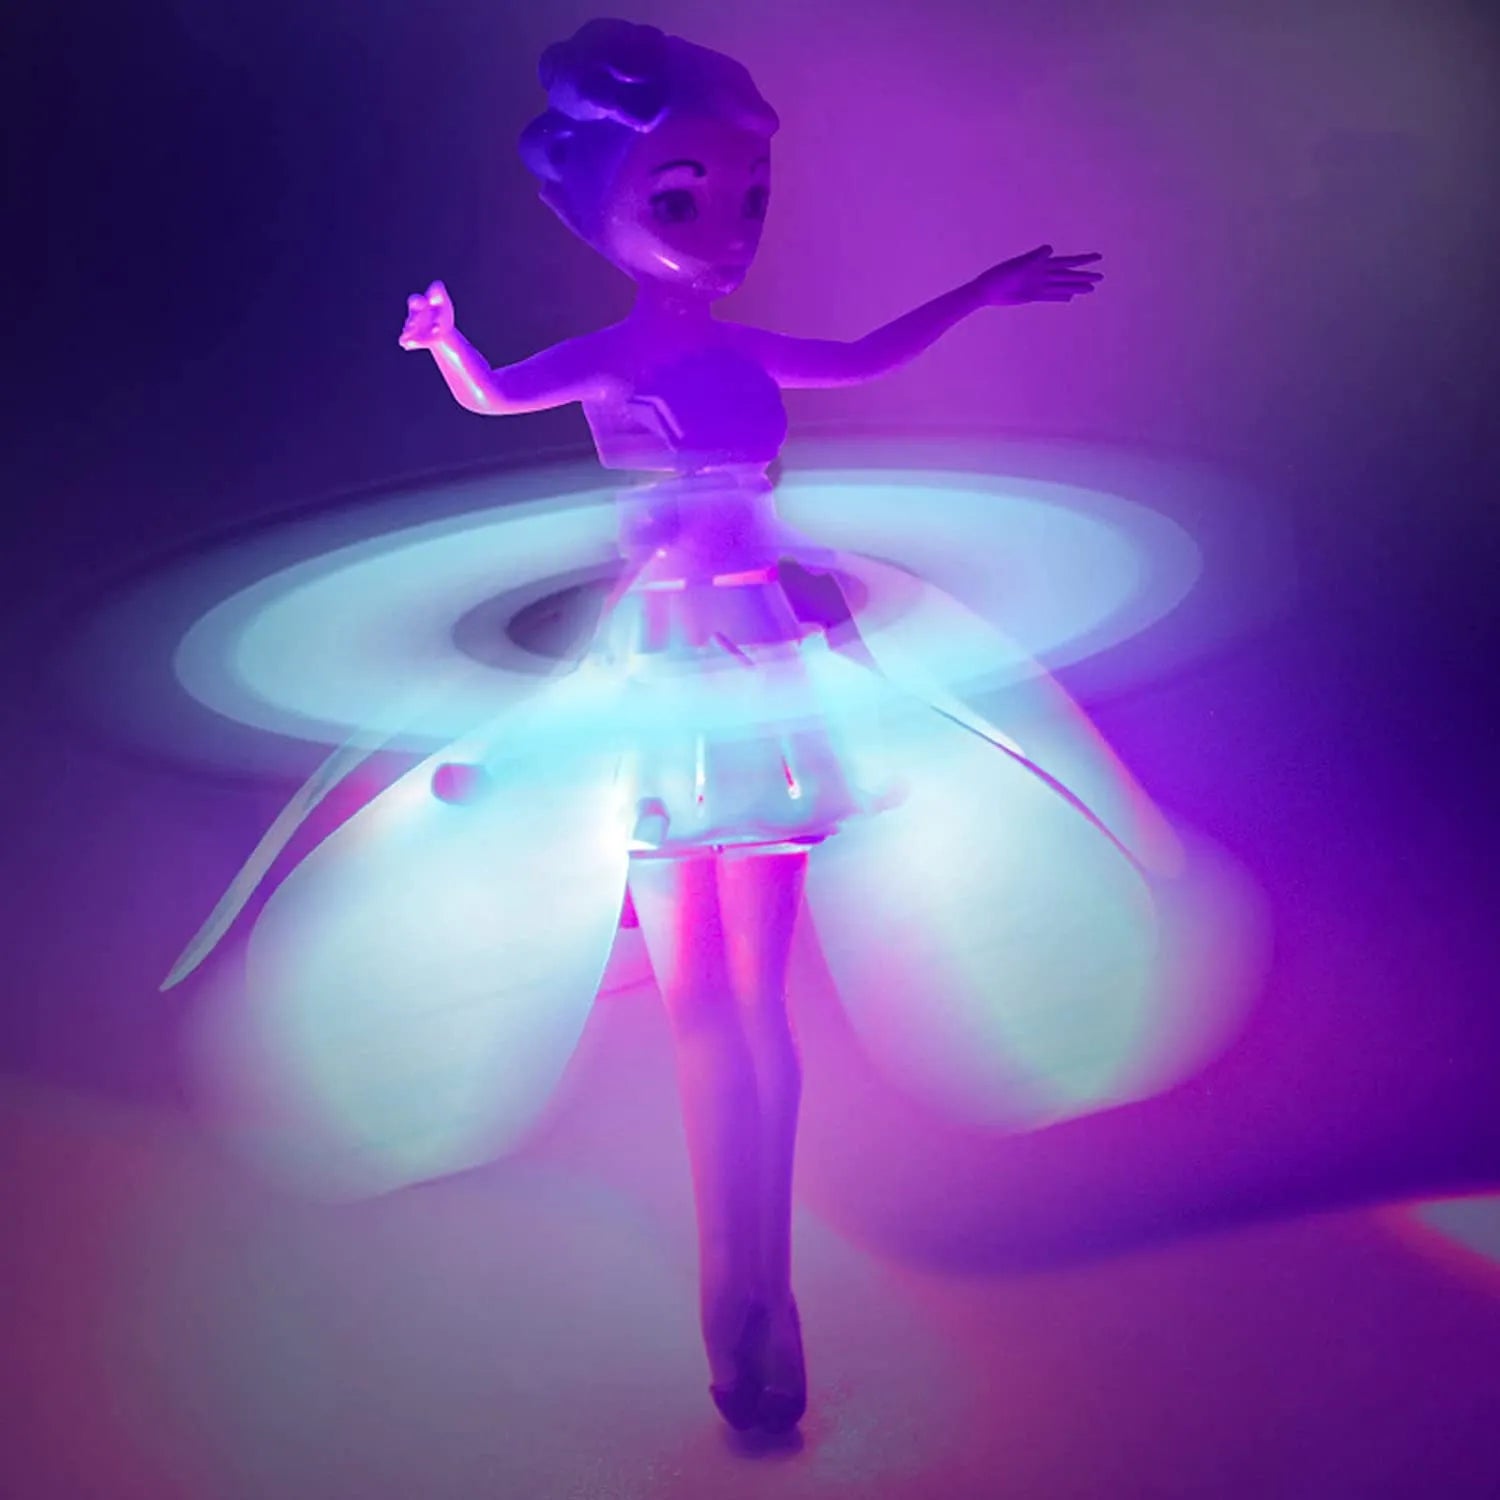 Flying Fairy Toys Sky Dancers Flying Princess Doll Infrared Induction - ToylandEU